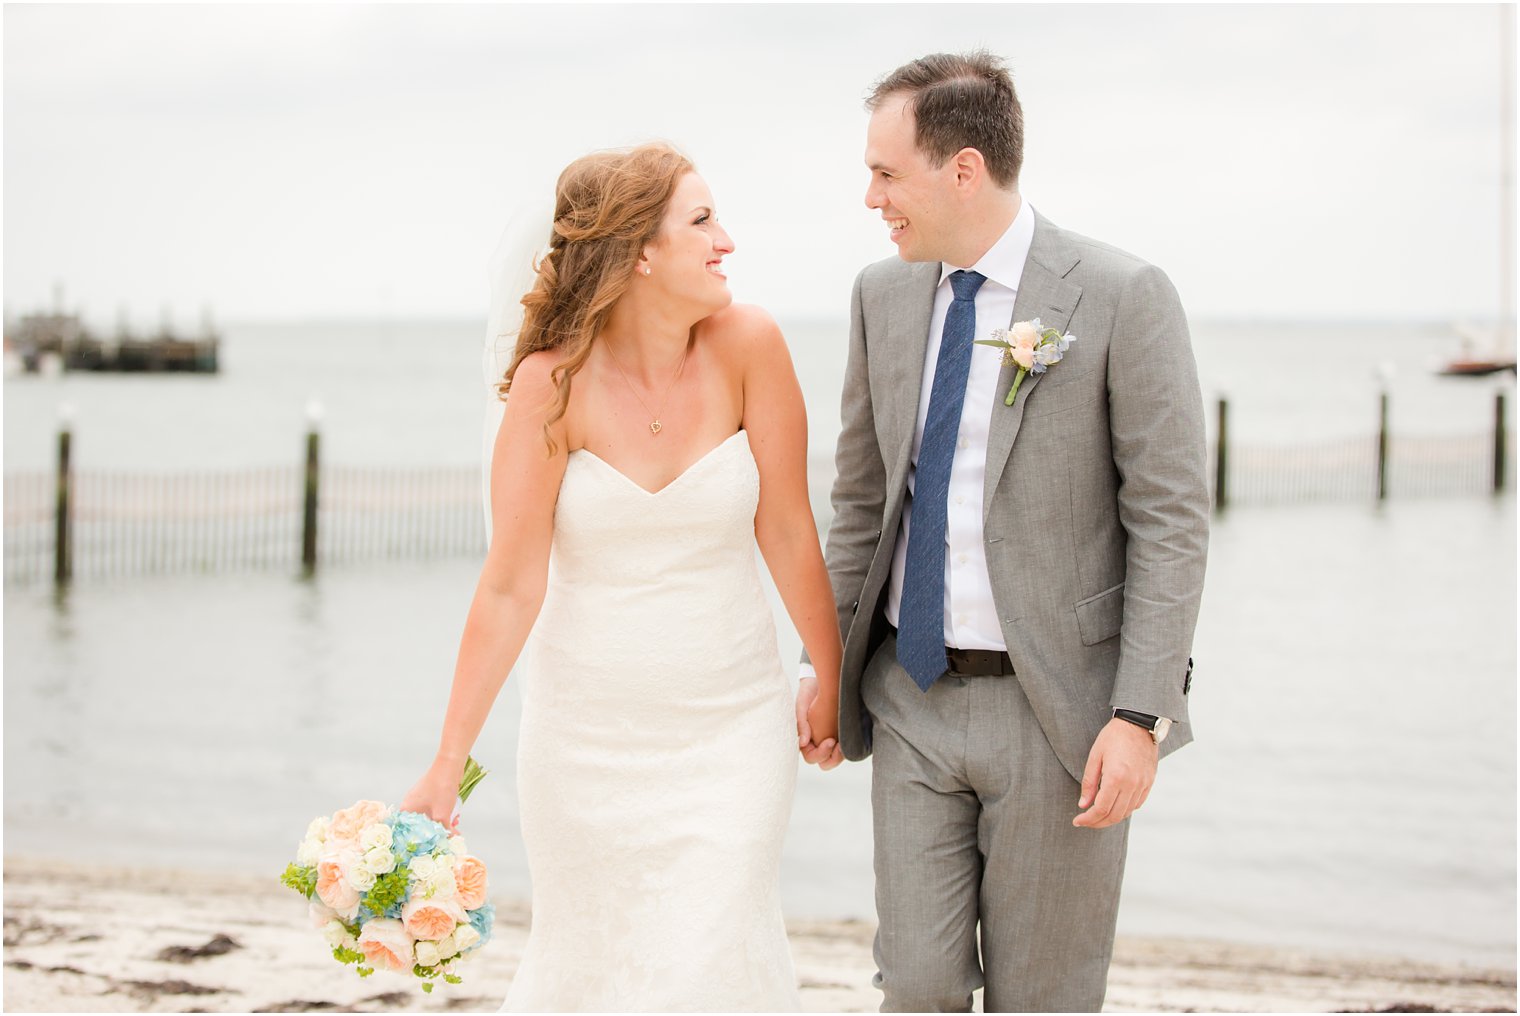 waterfront beach wedding portraits by Idalia Photography